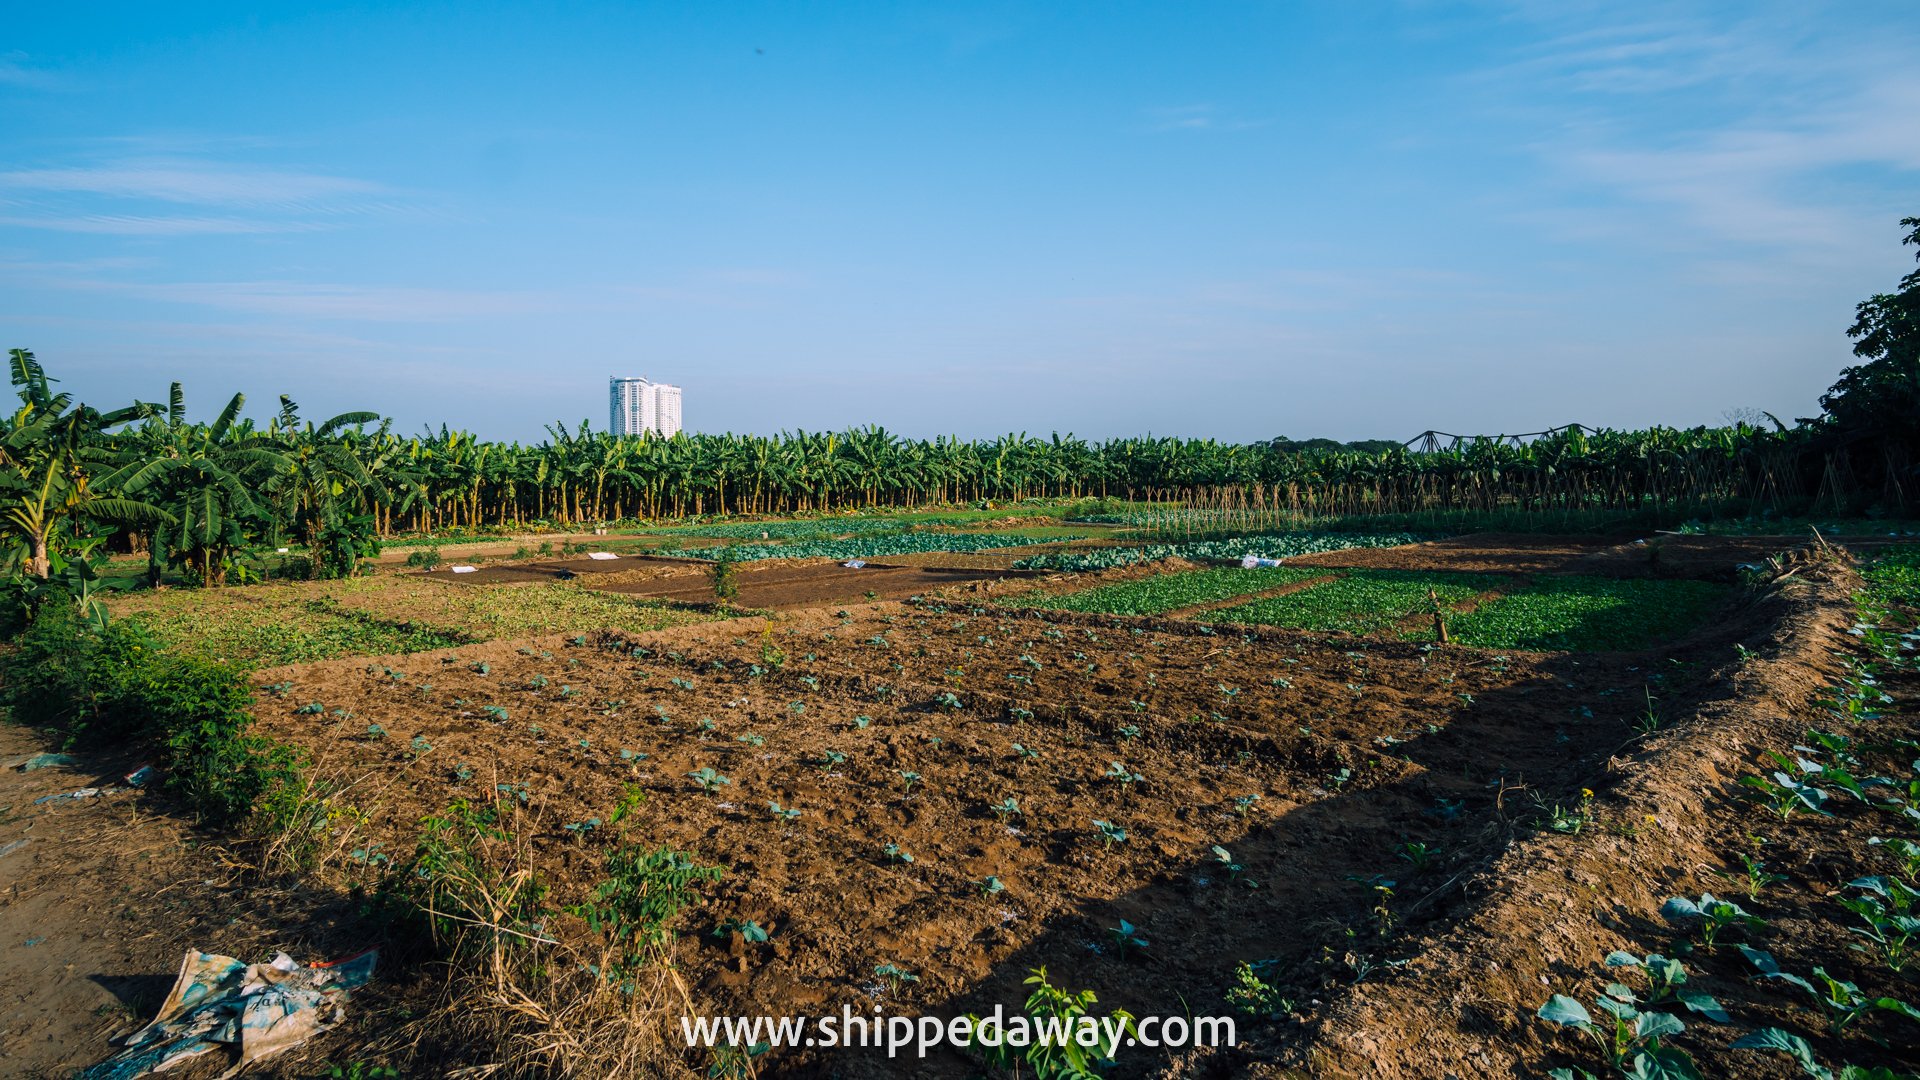 Cultivated vegetable gardens surrounded by banana trees, Banana Island, Hanoi, Vietnam